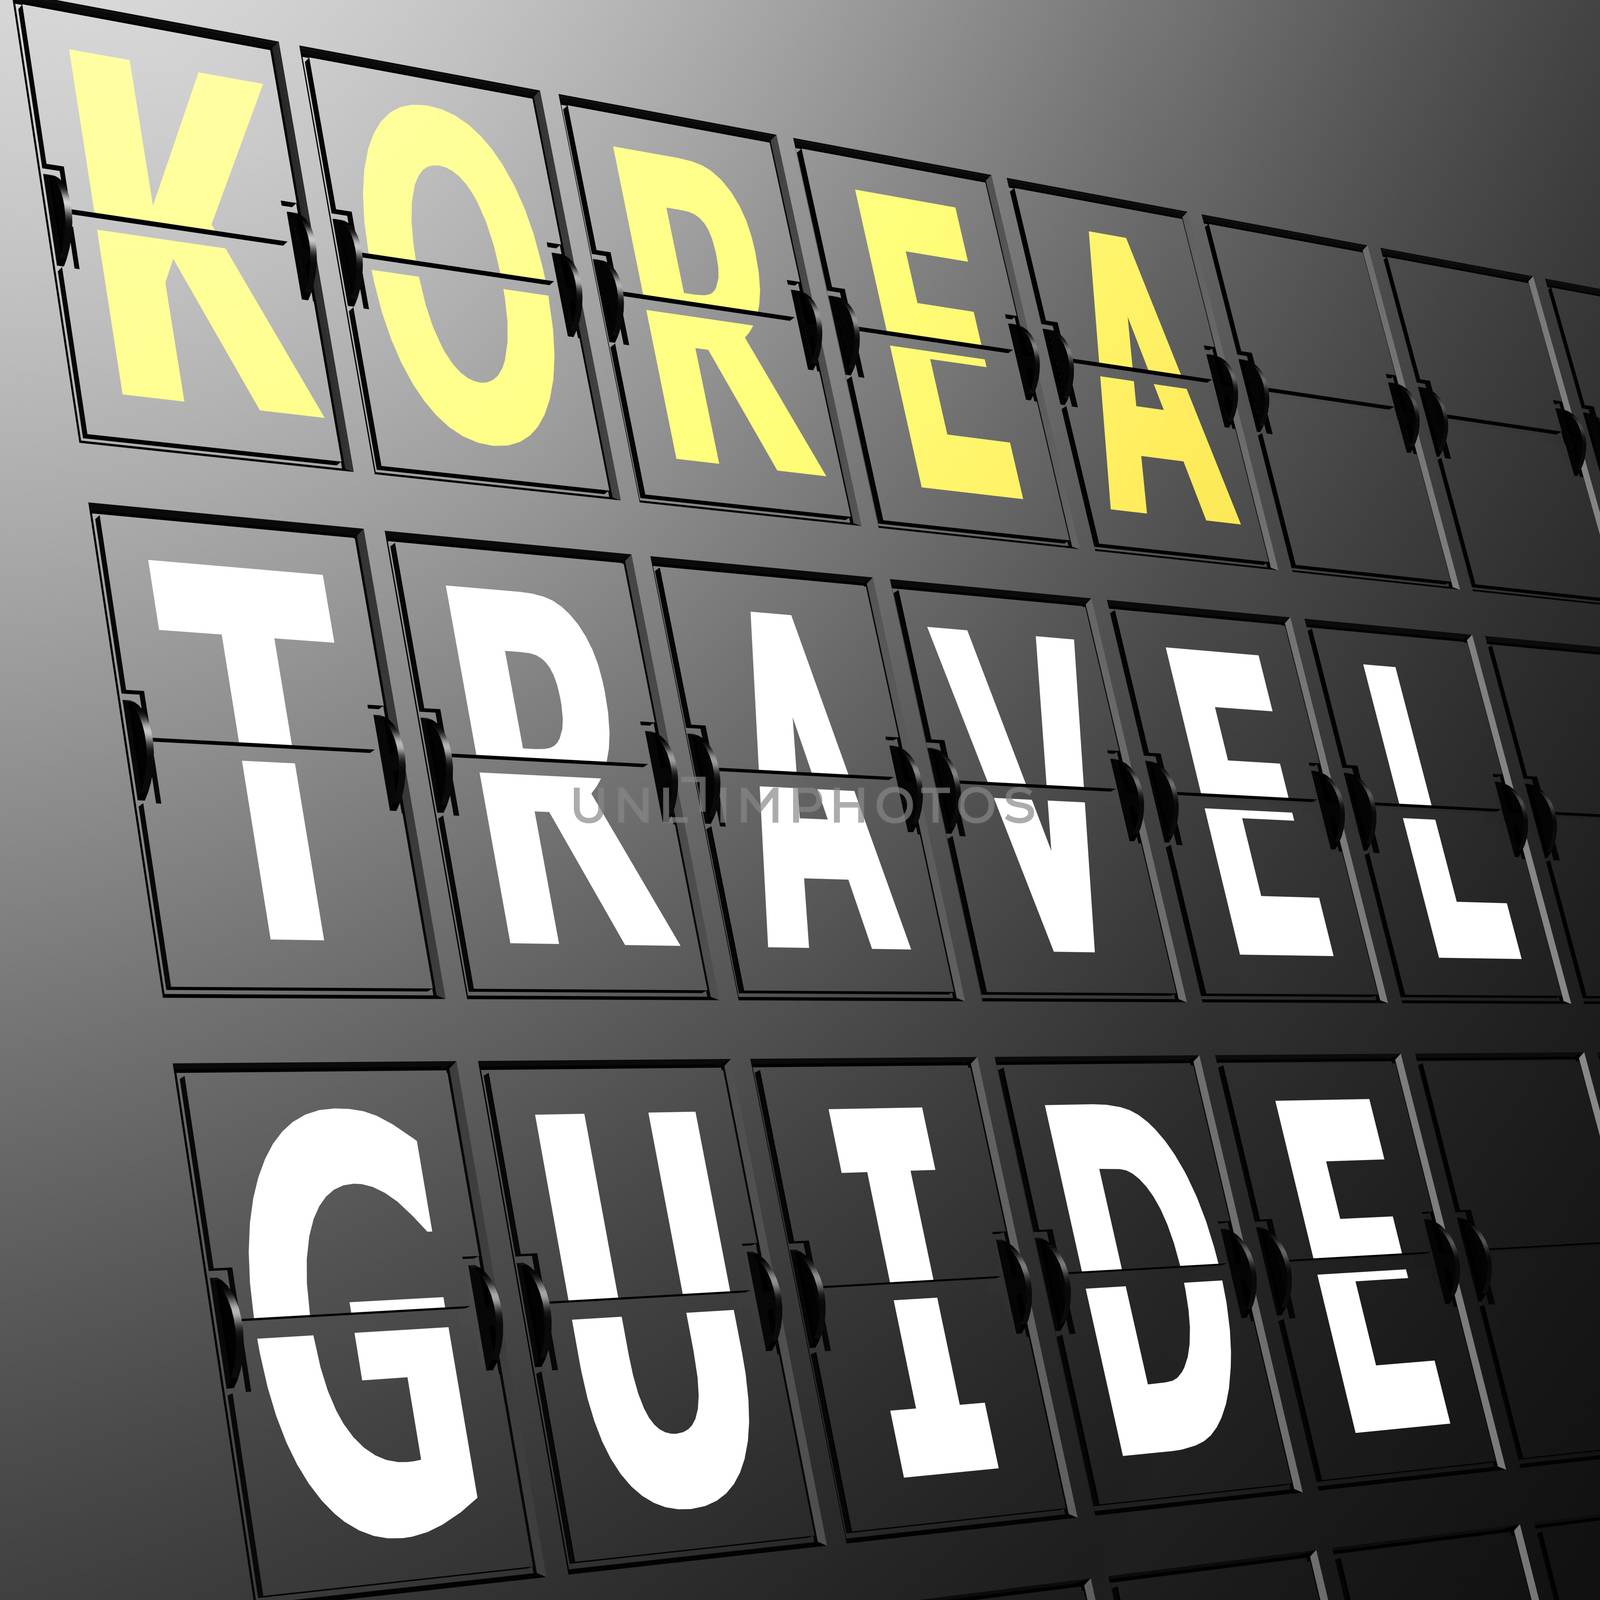 Airport display Korea travel guide by tang90246